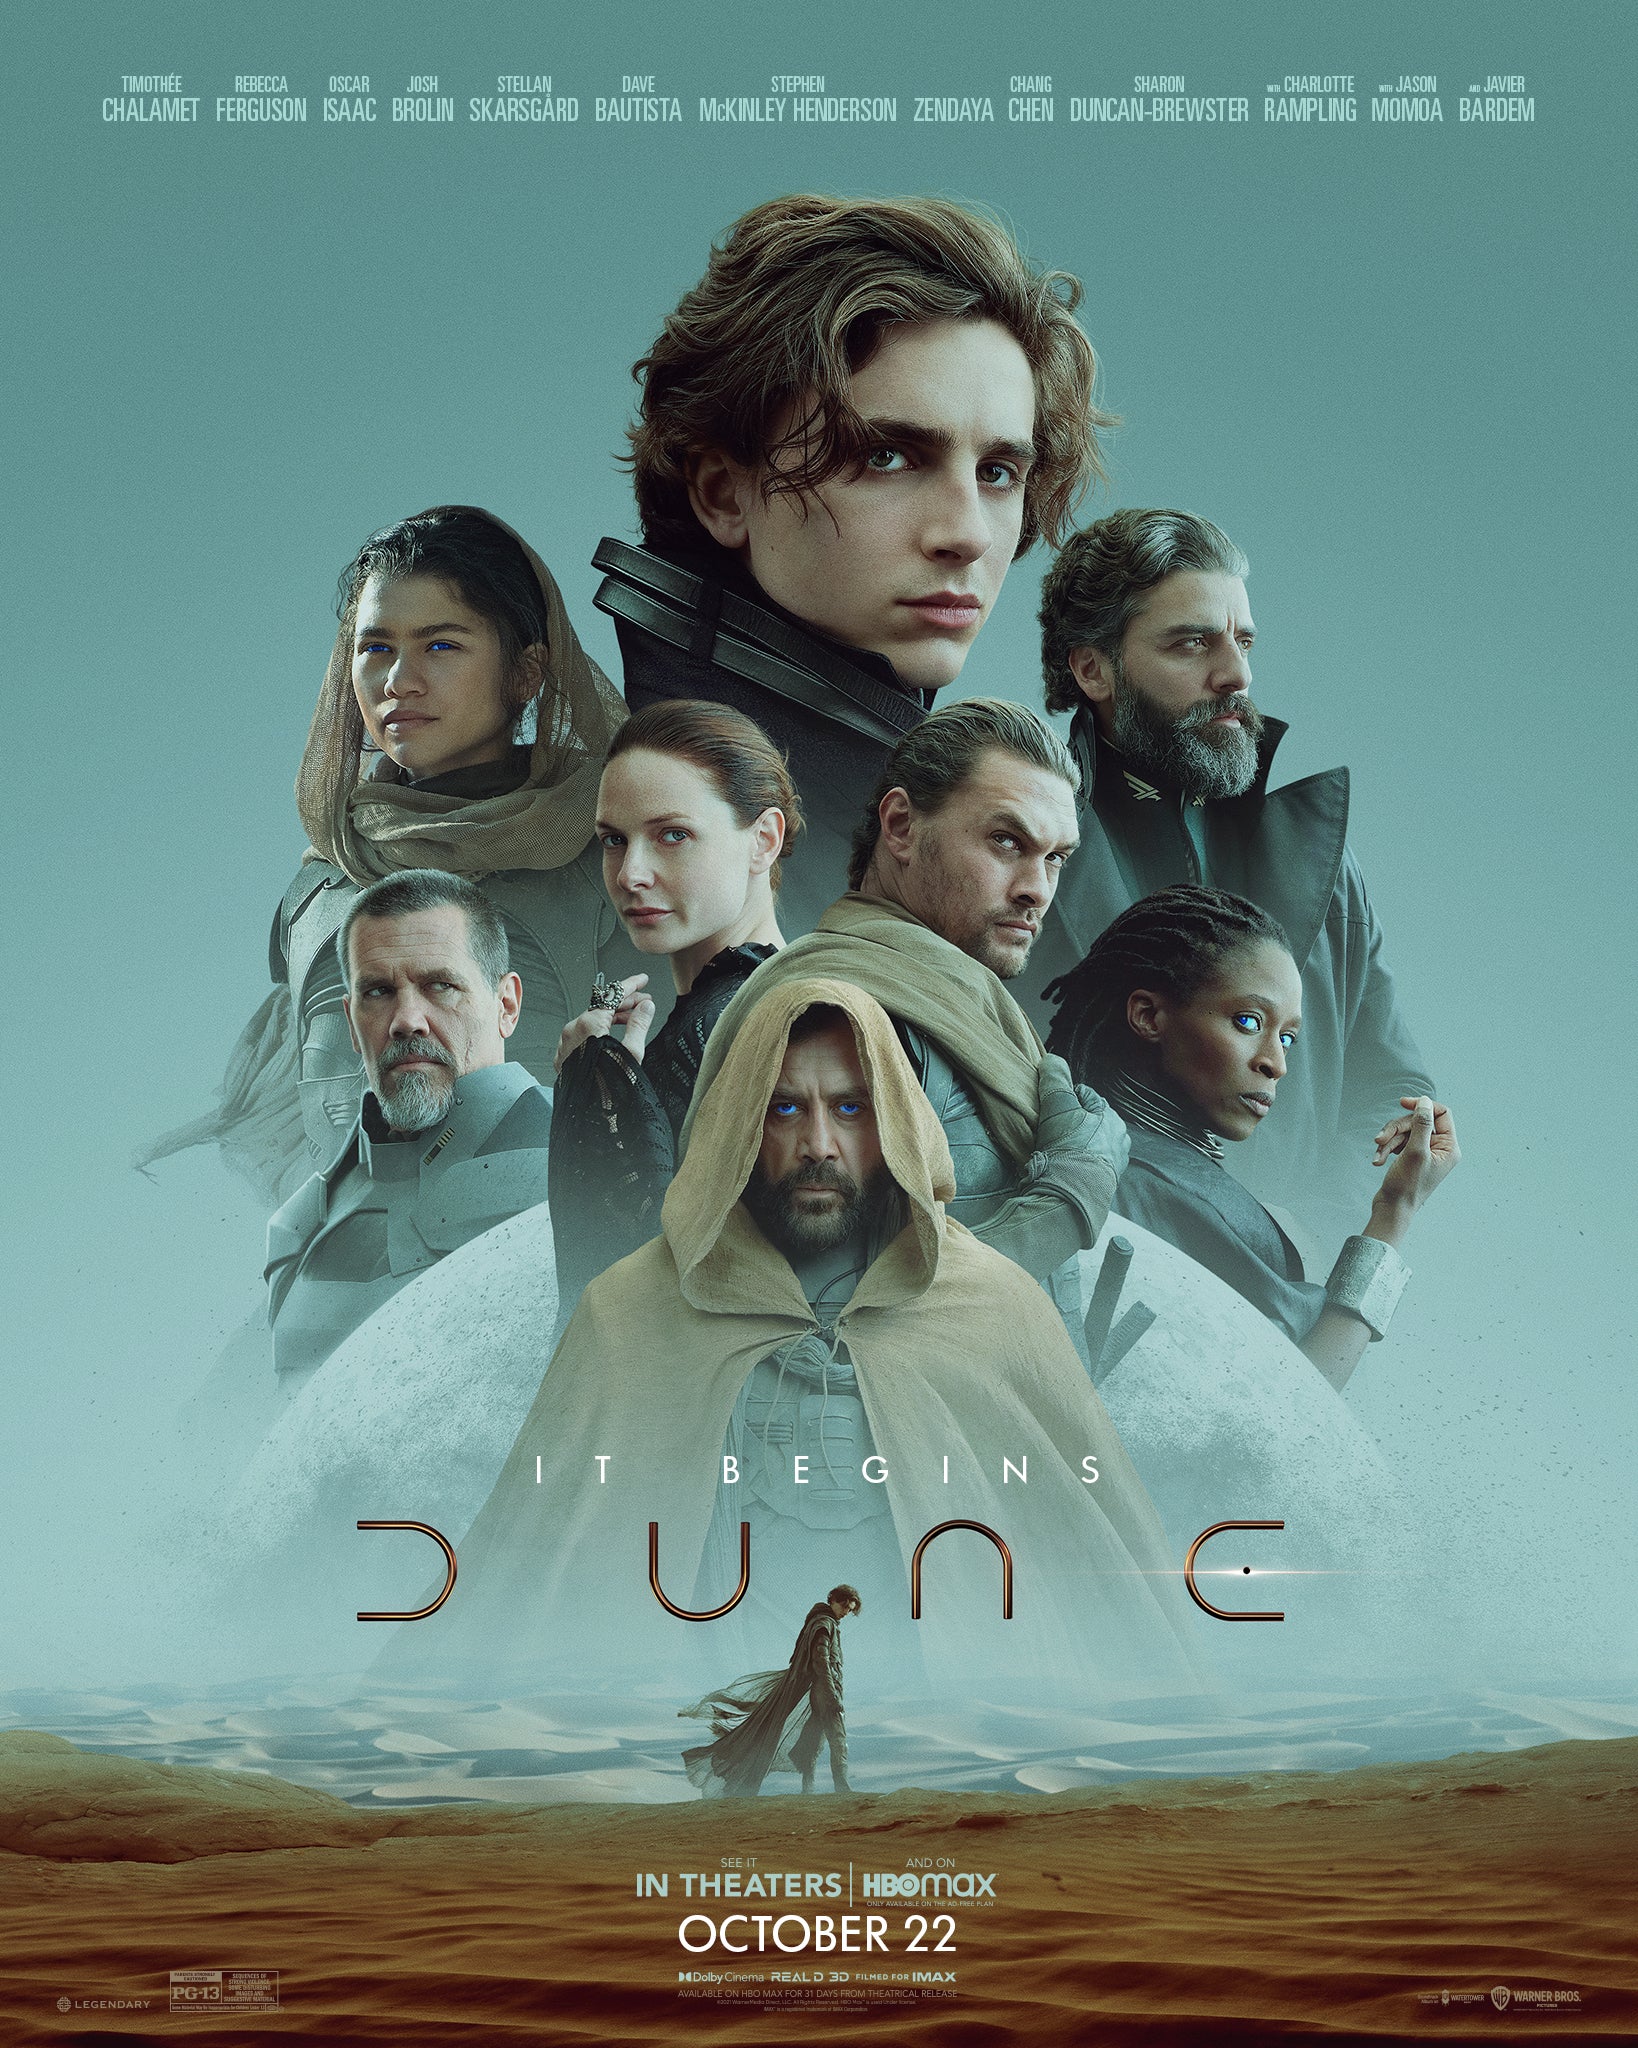 Dune, part one